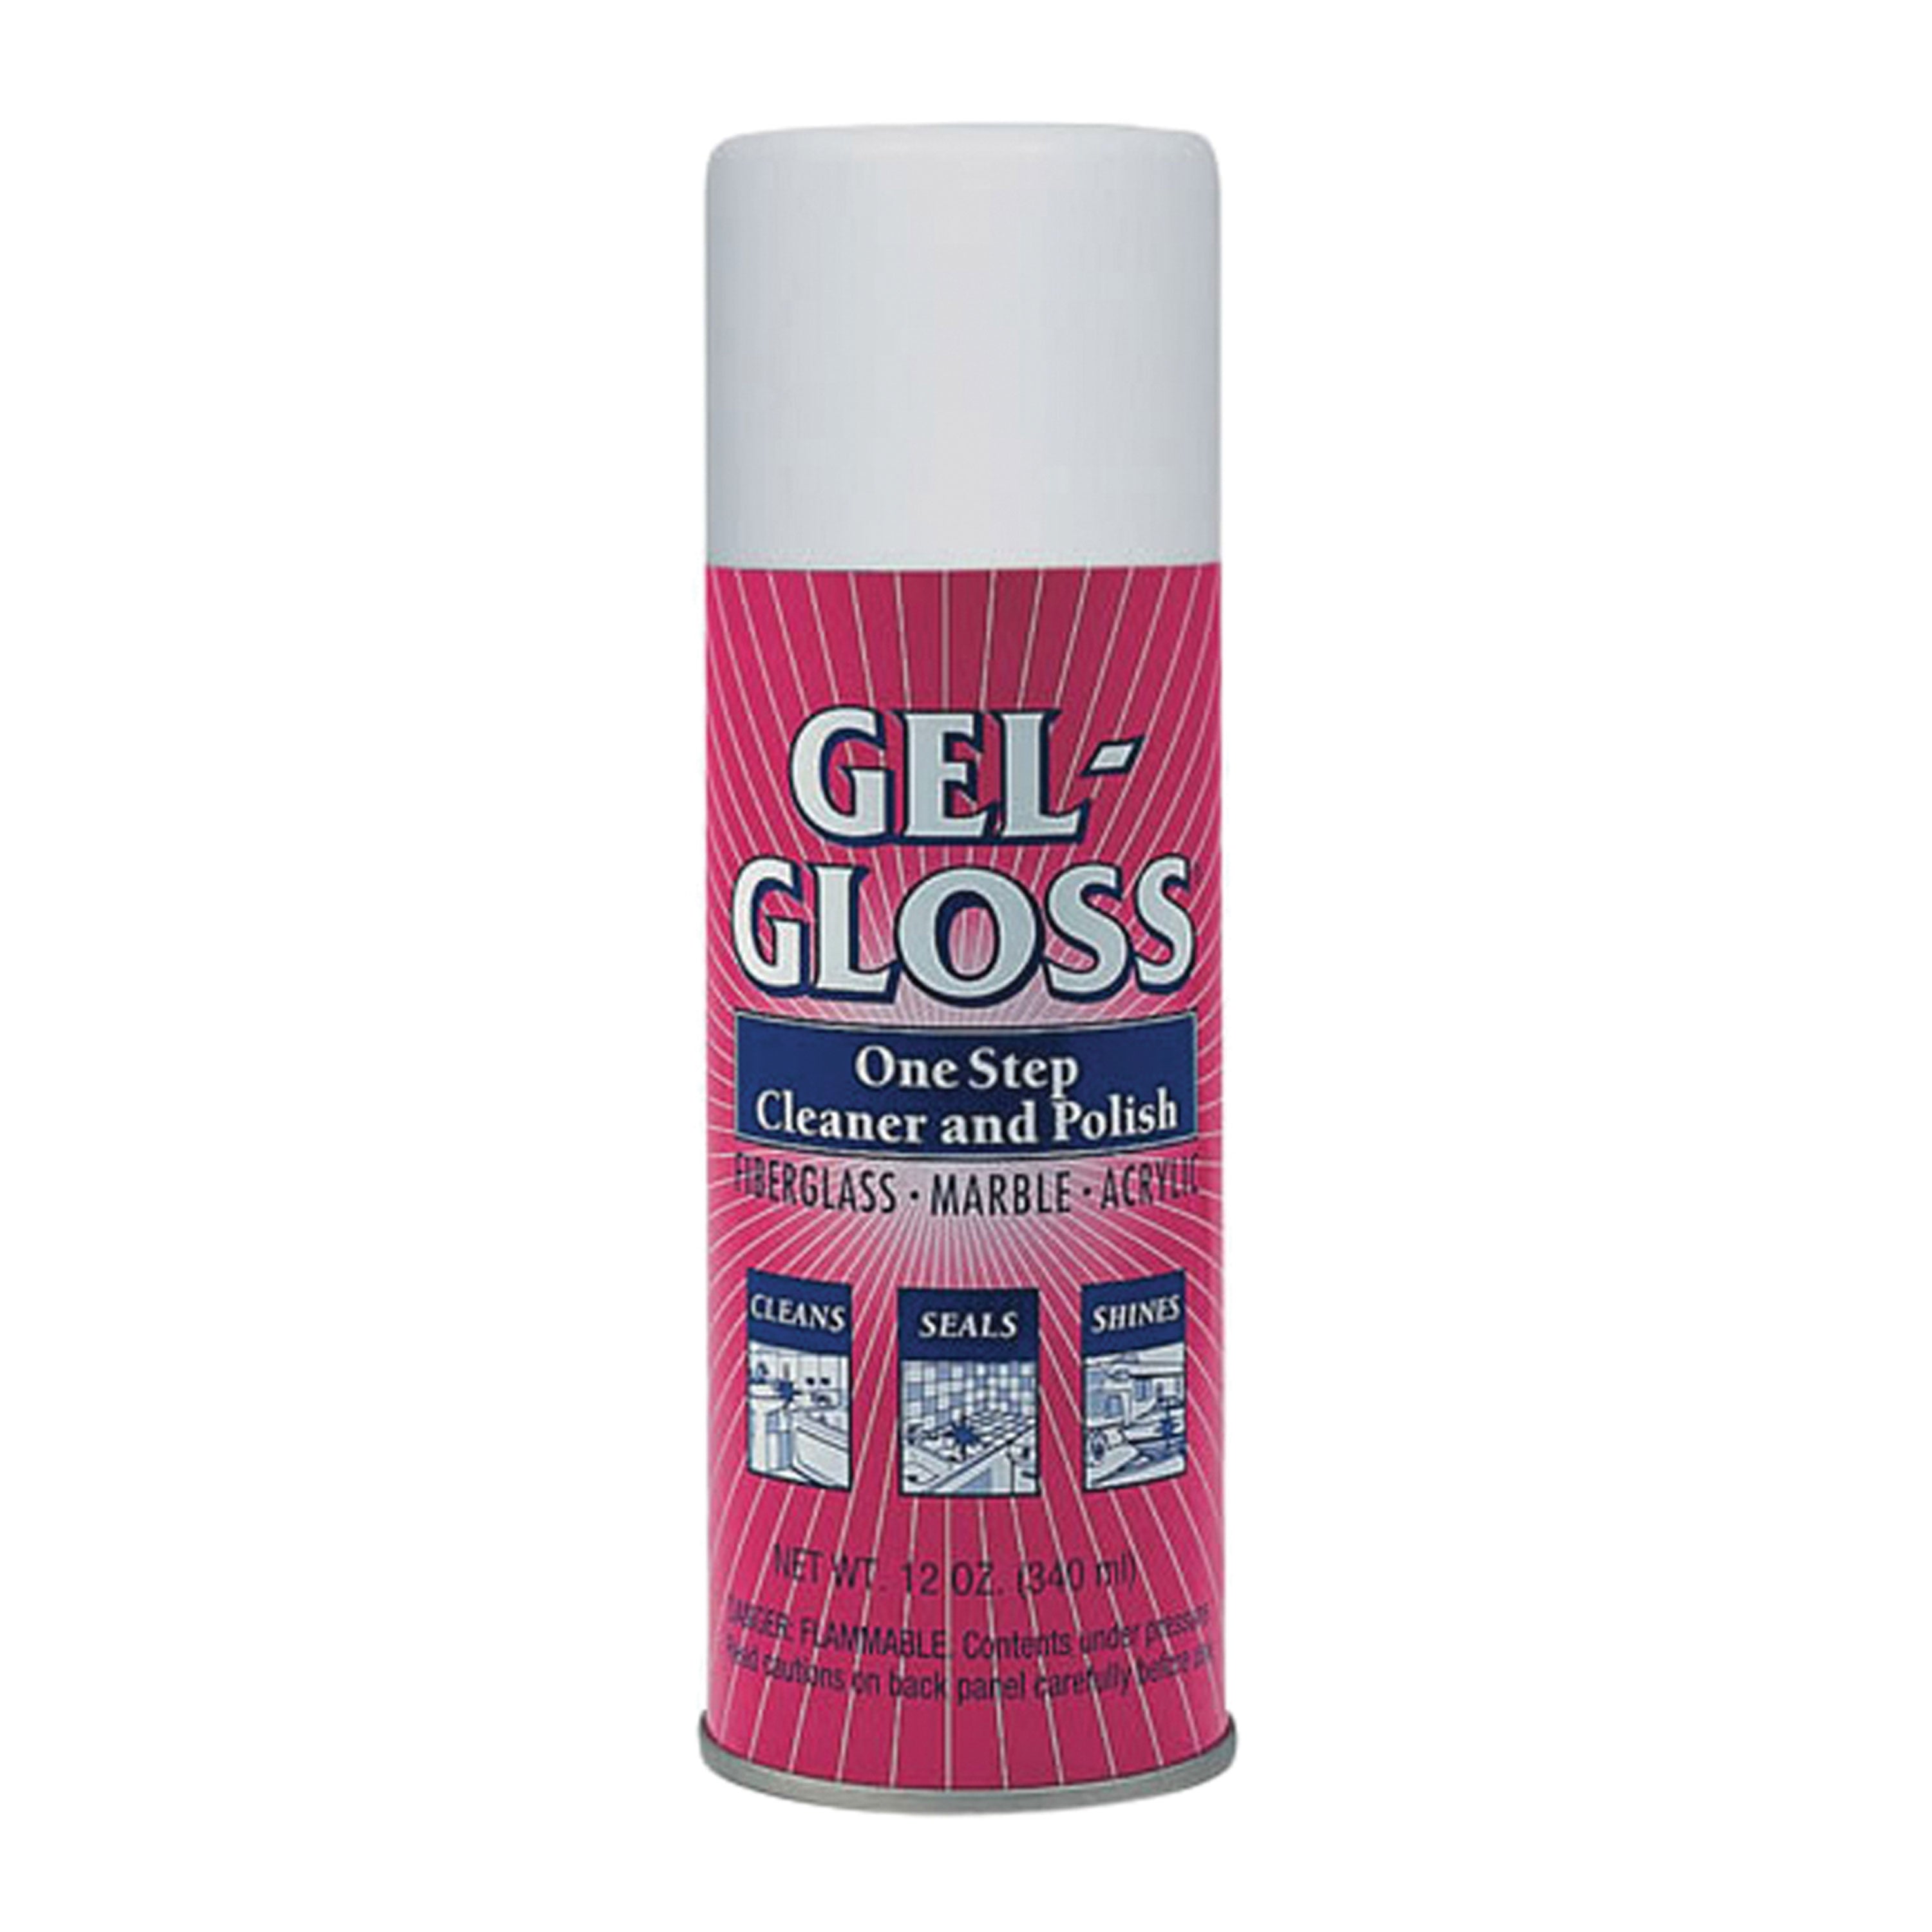 Gel-Gloss RV Multi Purpose Cleaner 64 oz.